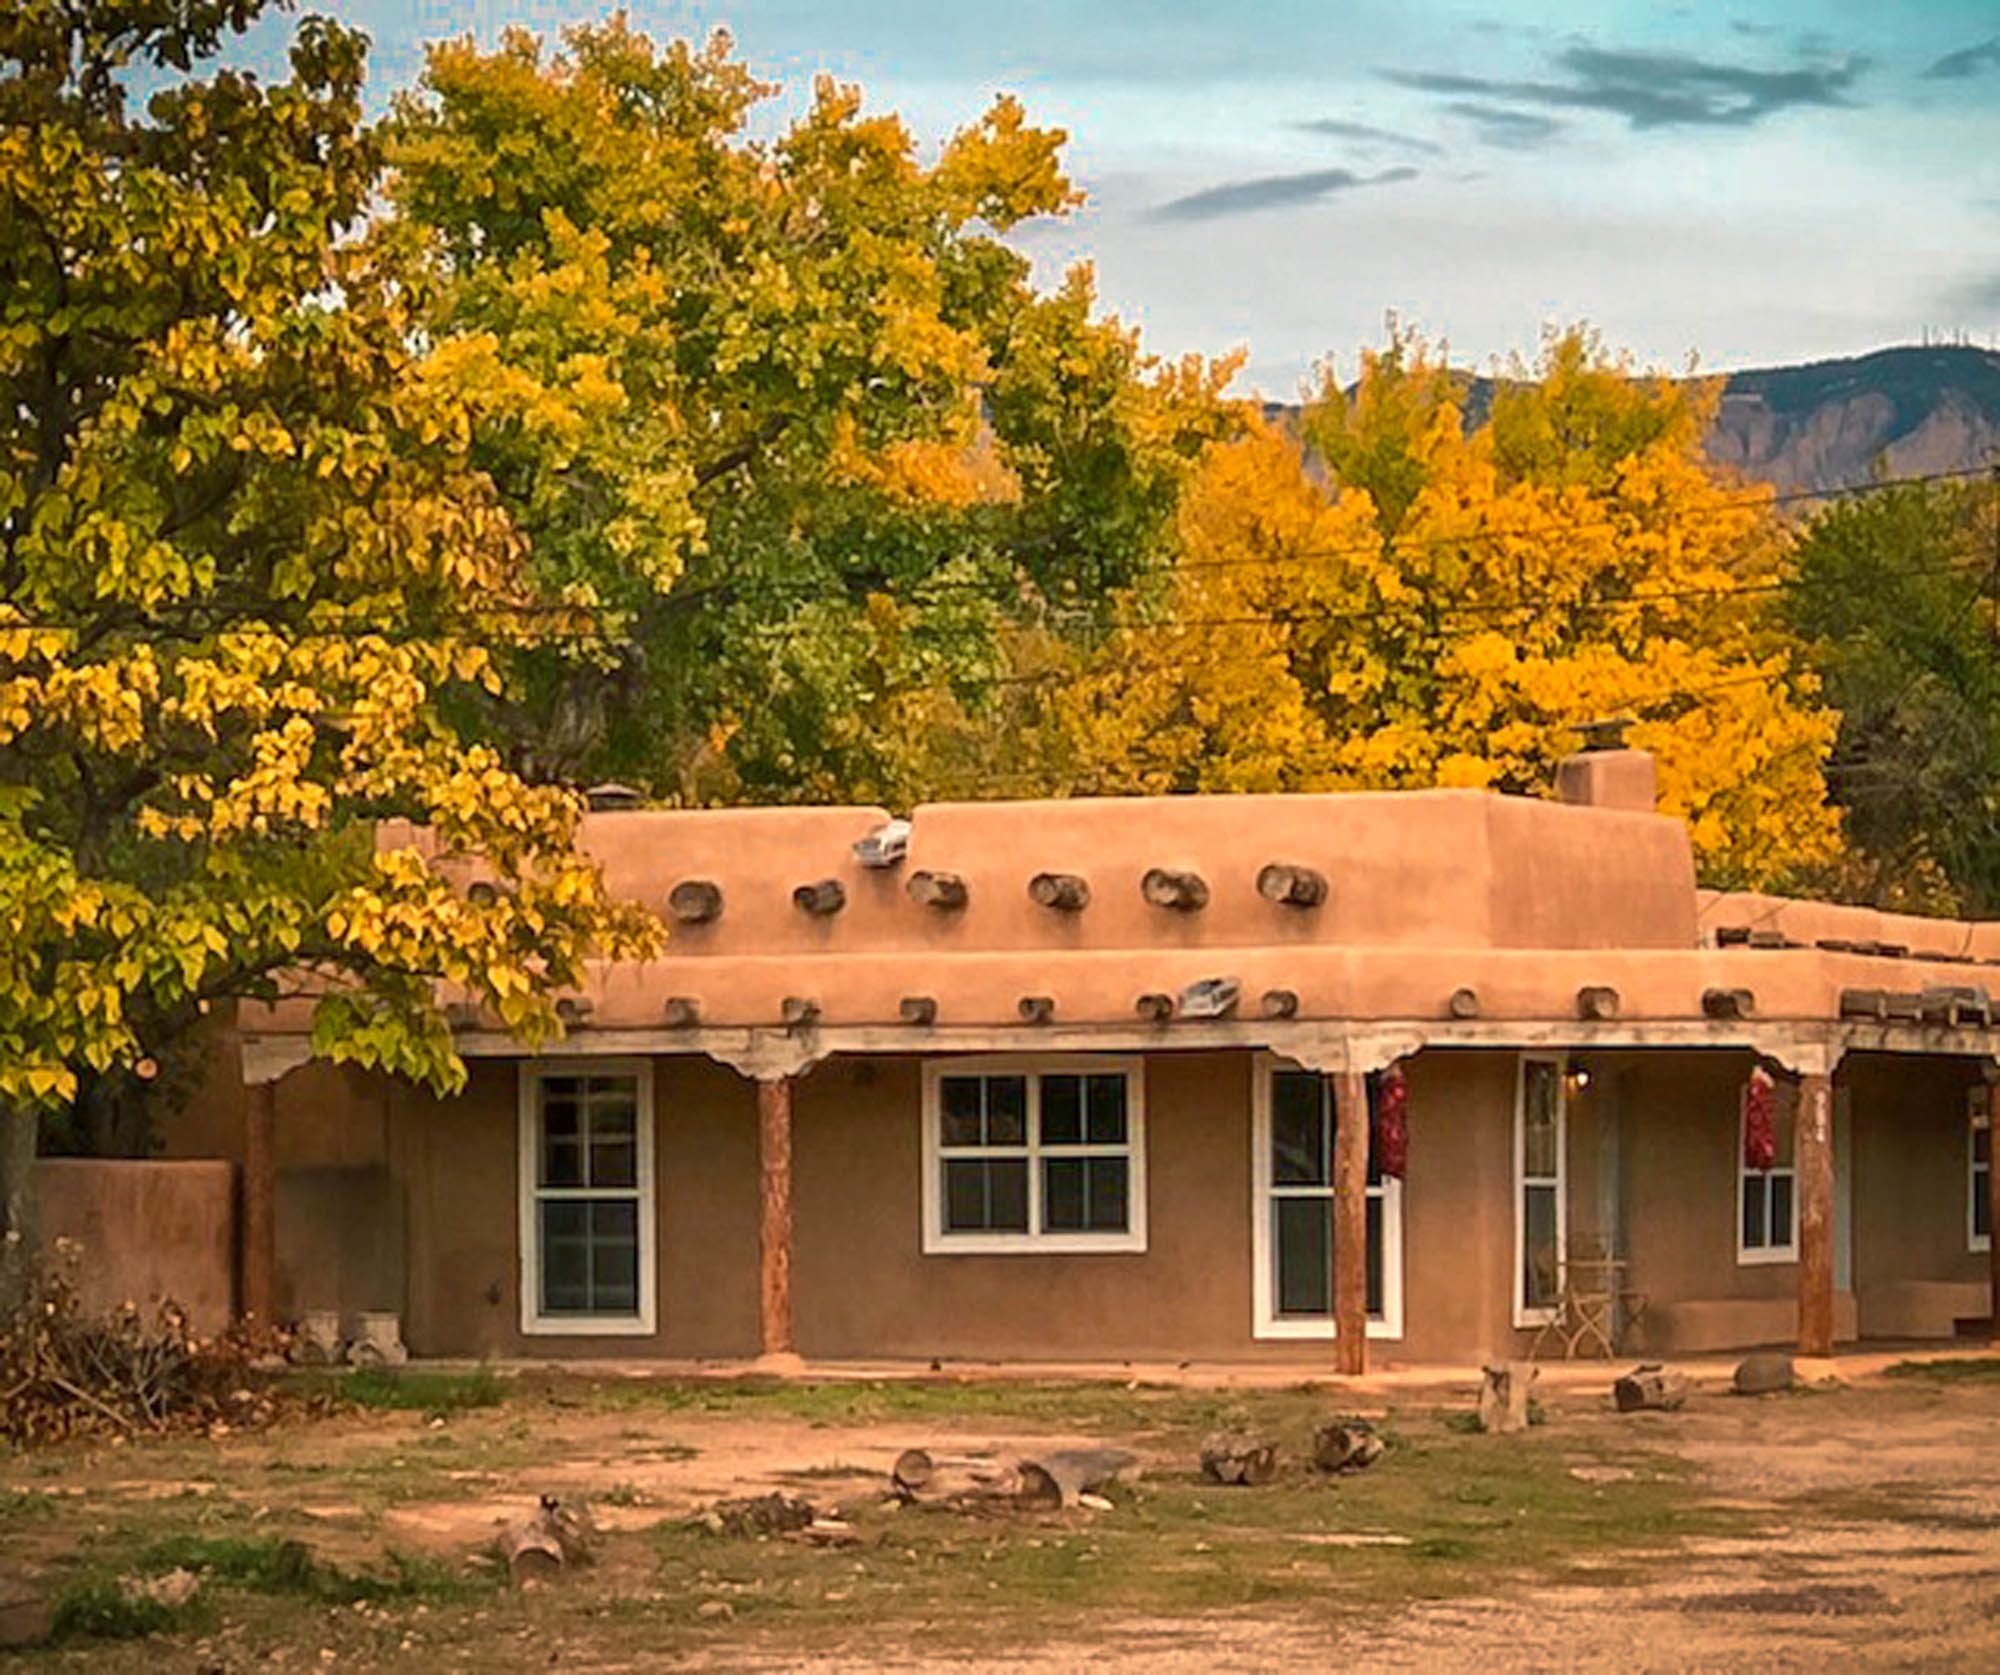 La Bendicion, New Mexico